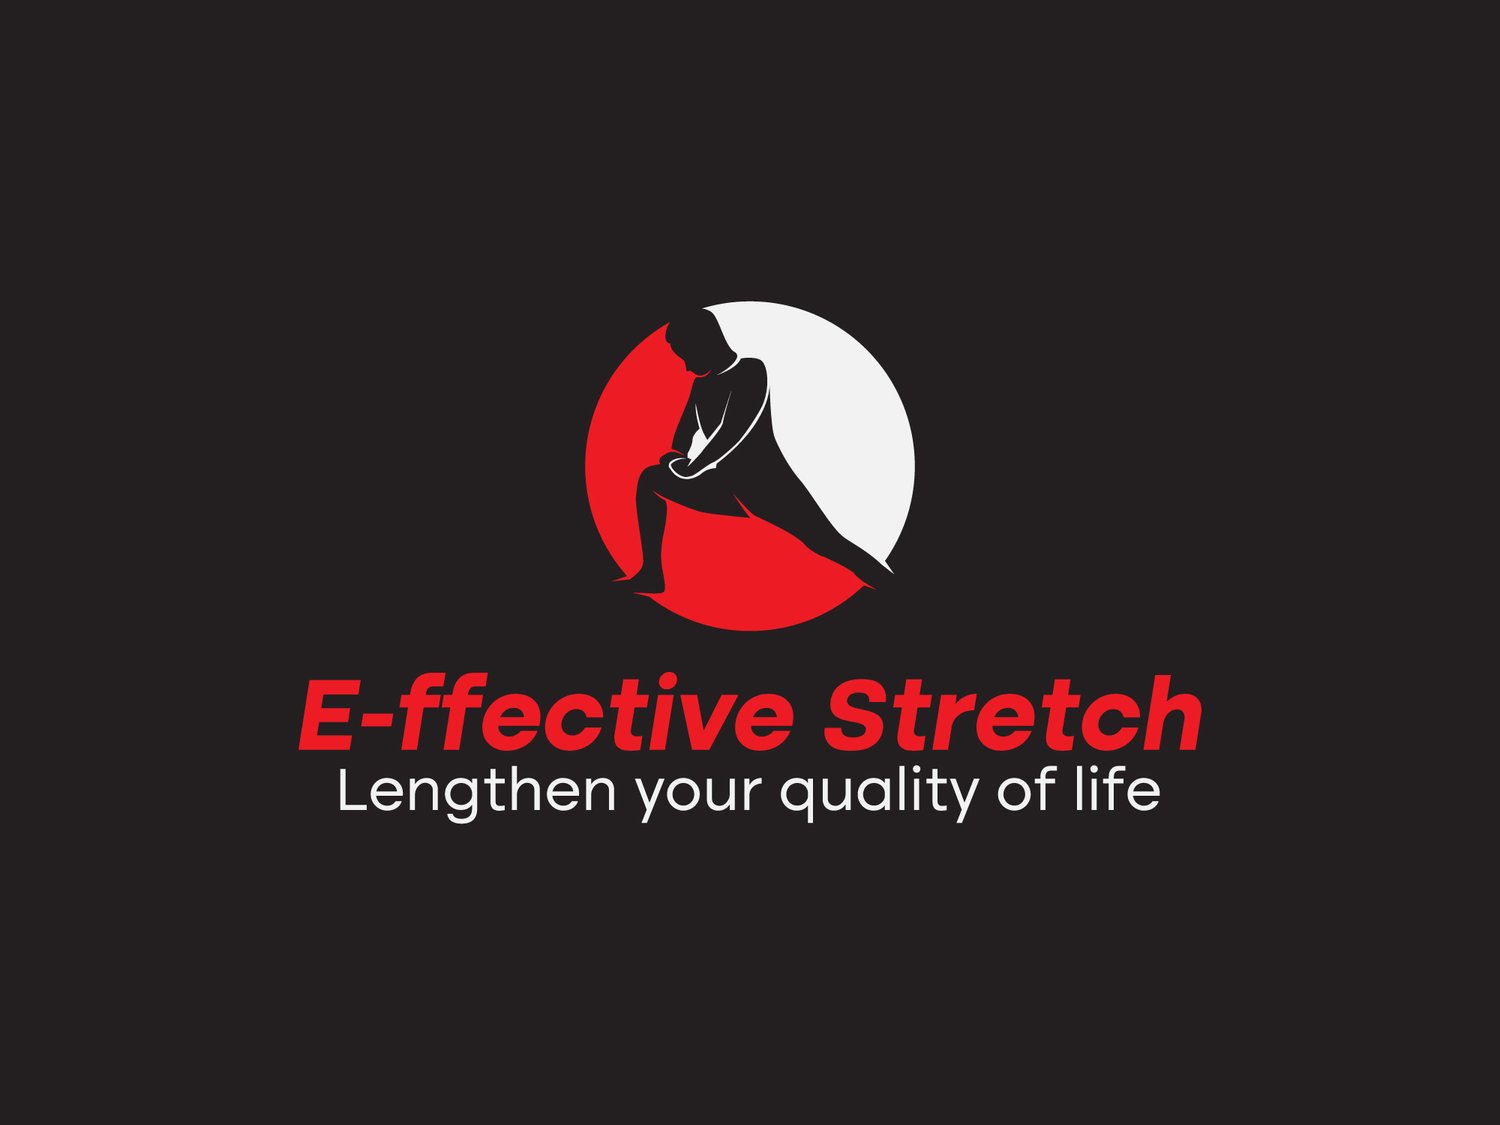 E-ffective Stretch